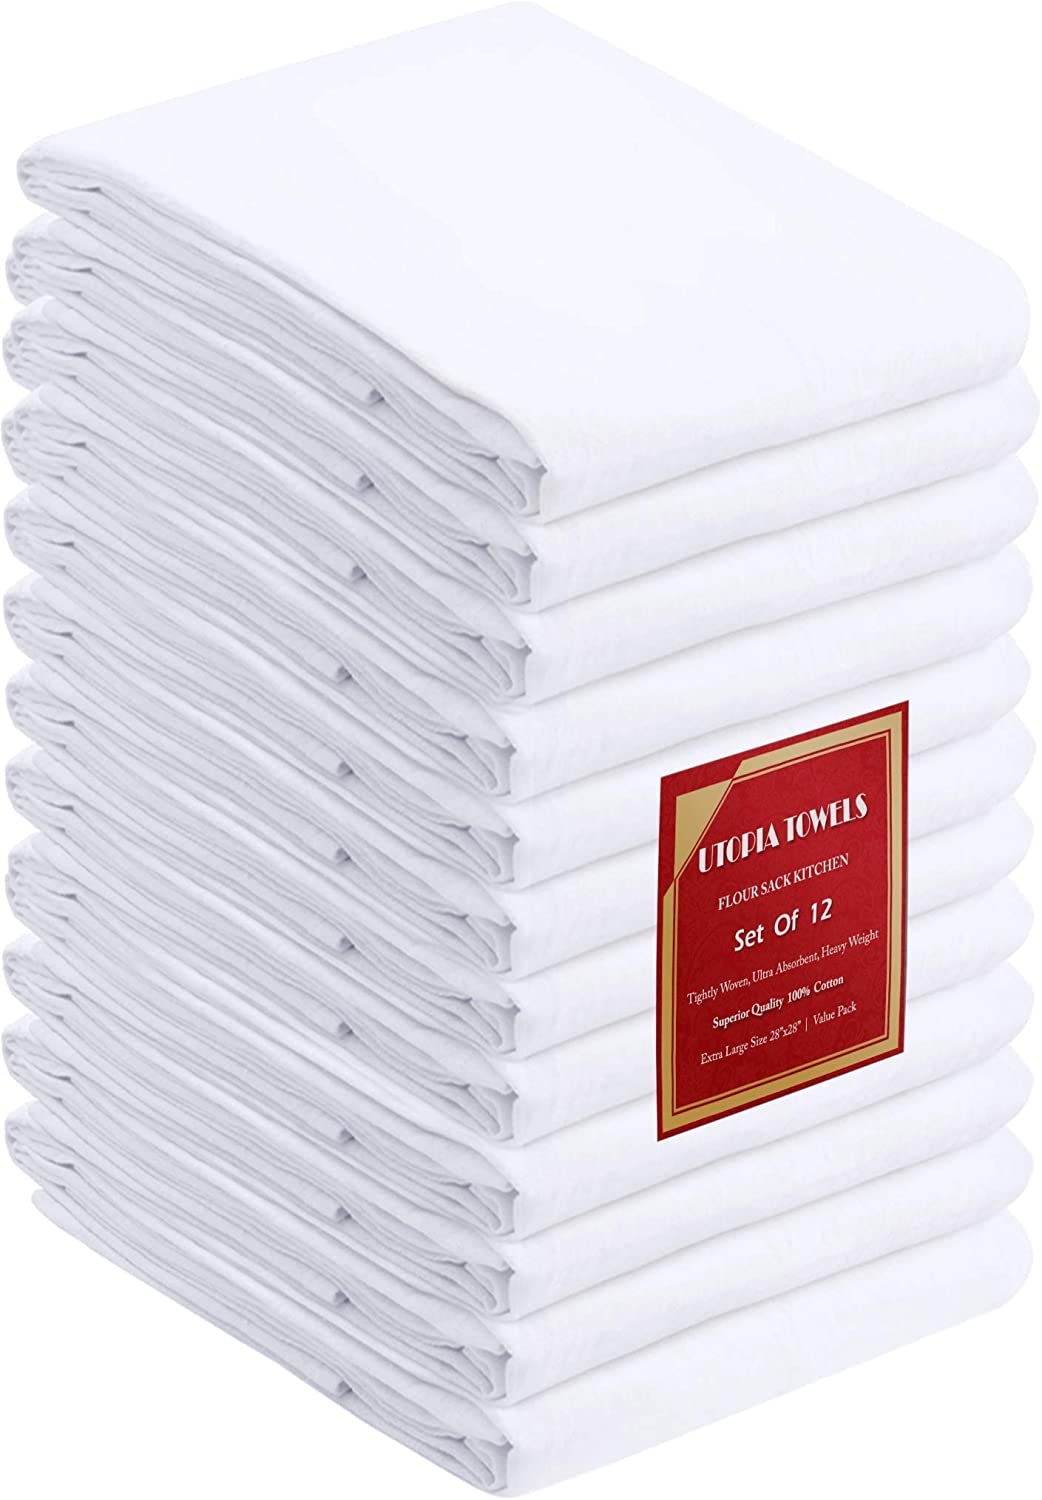 Utopia Kitchen Flour Sack Dish Towels 24 Pack Cotton Kitchen Towels White  Grey